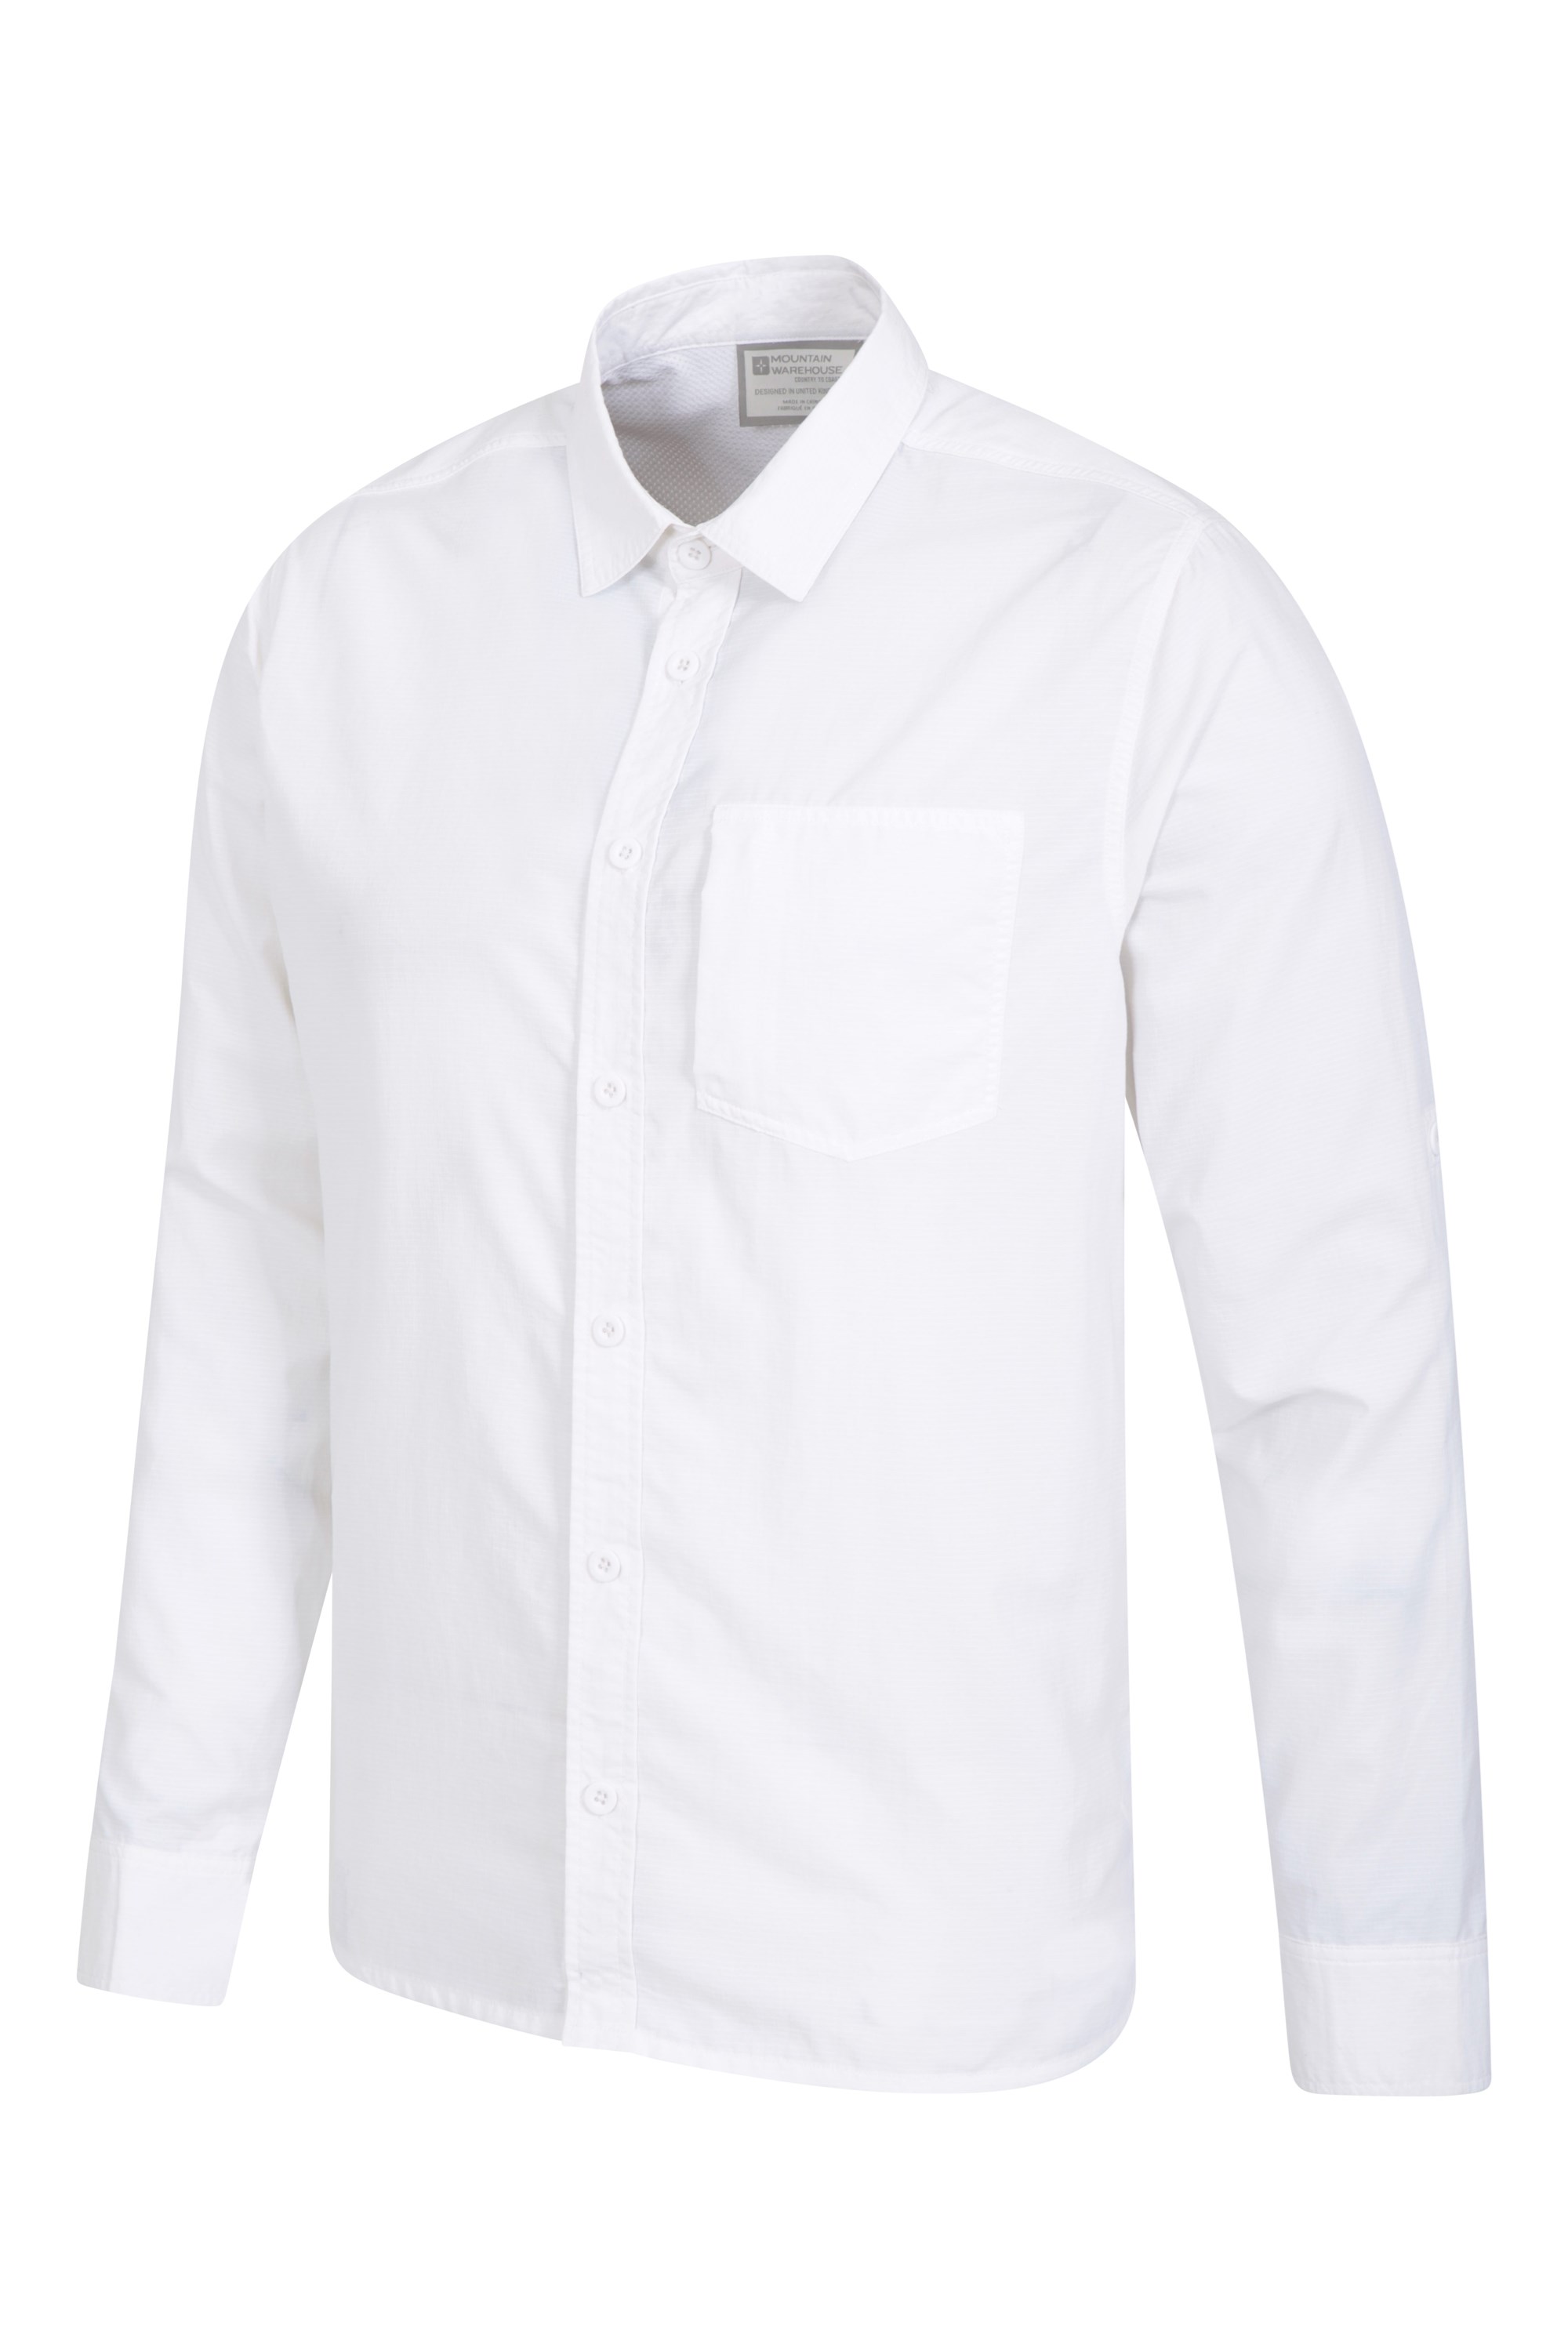 Mountain Warehouse Navigator Convertible Mens Long-Sleeve Shirt - White | Size XL